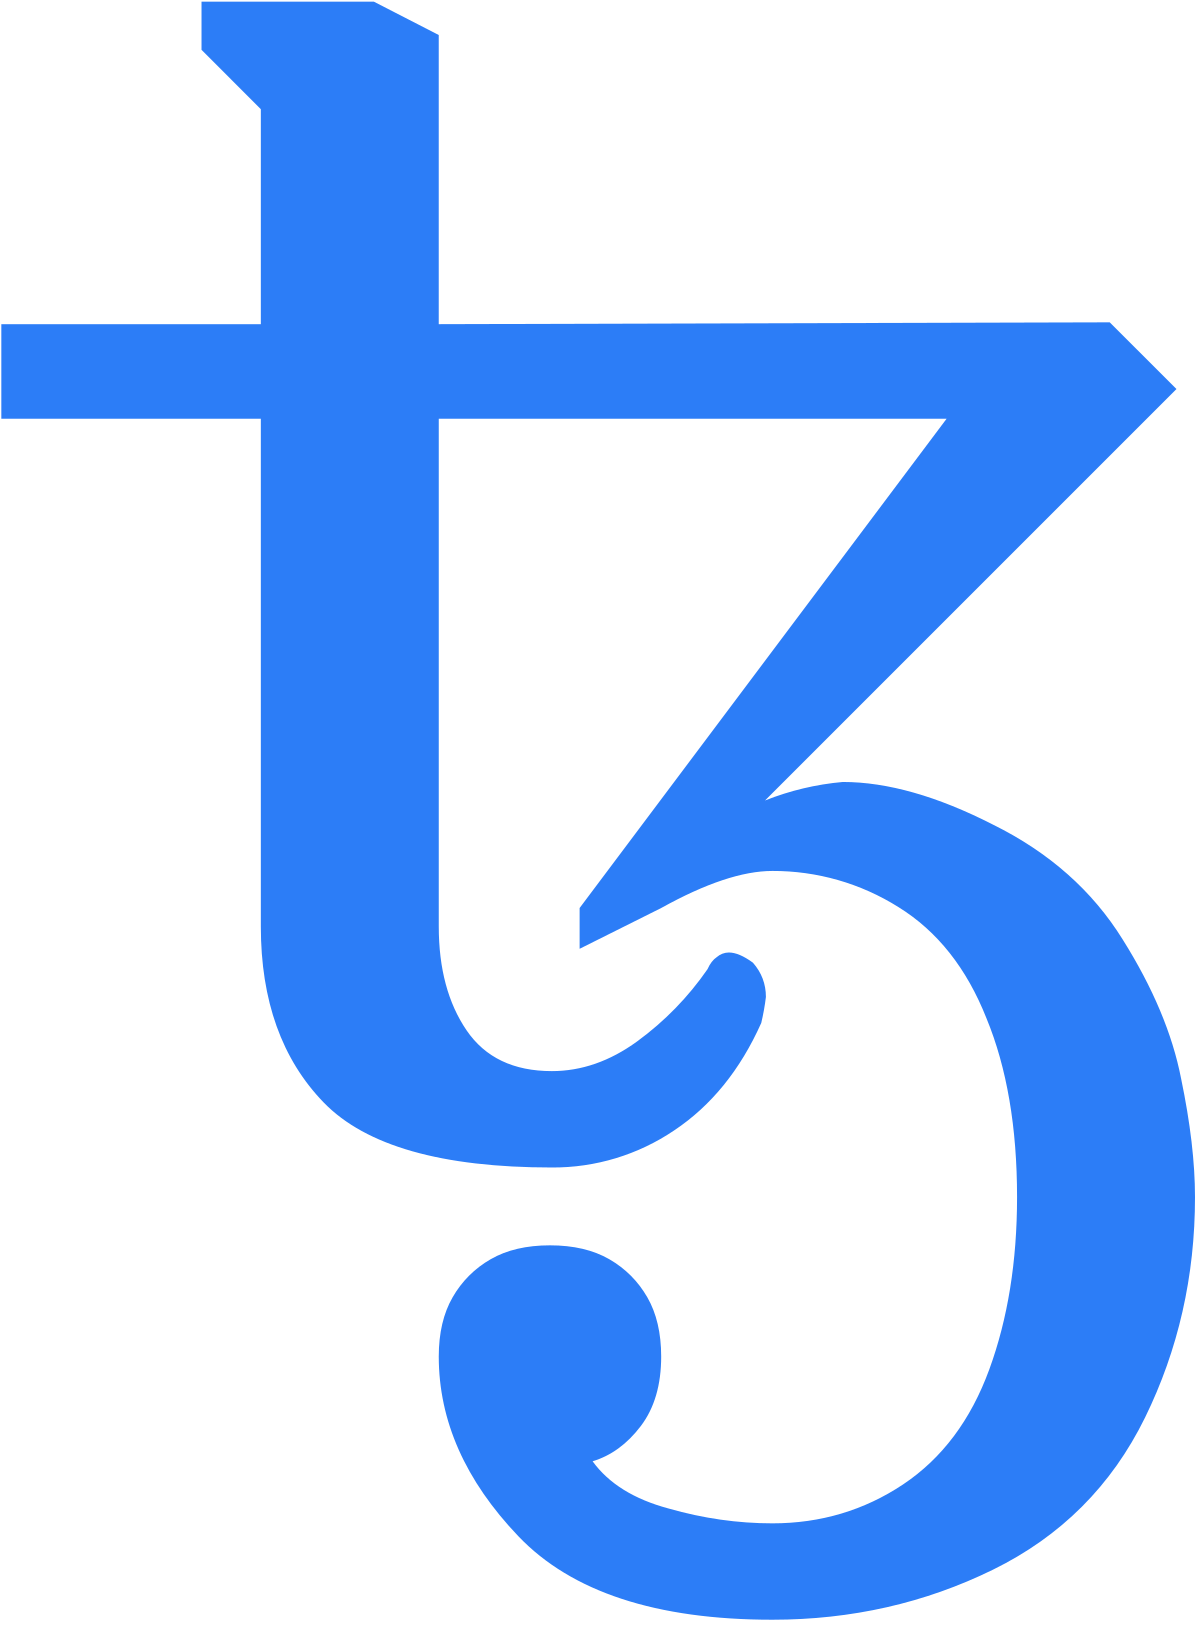 Archivo:Tezos logo.svg - Wikimedia Commons